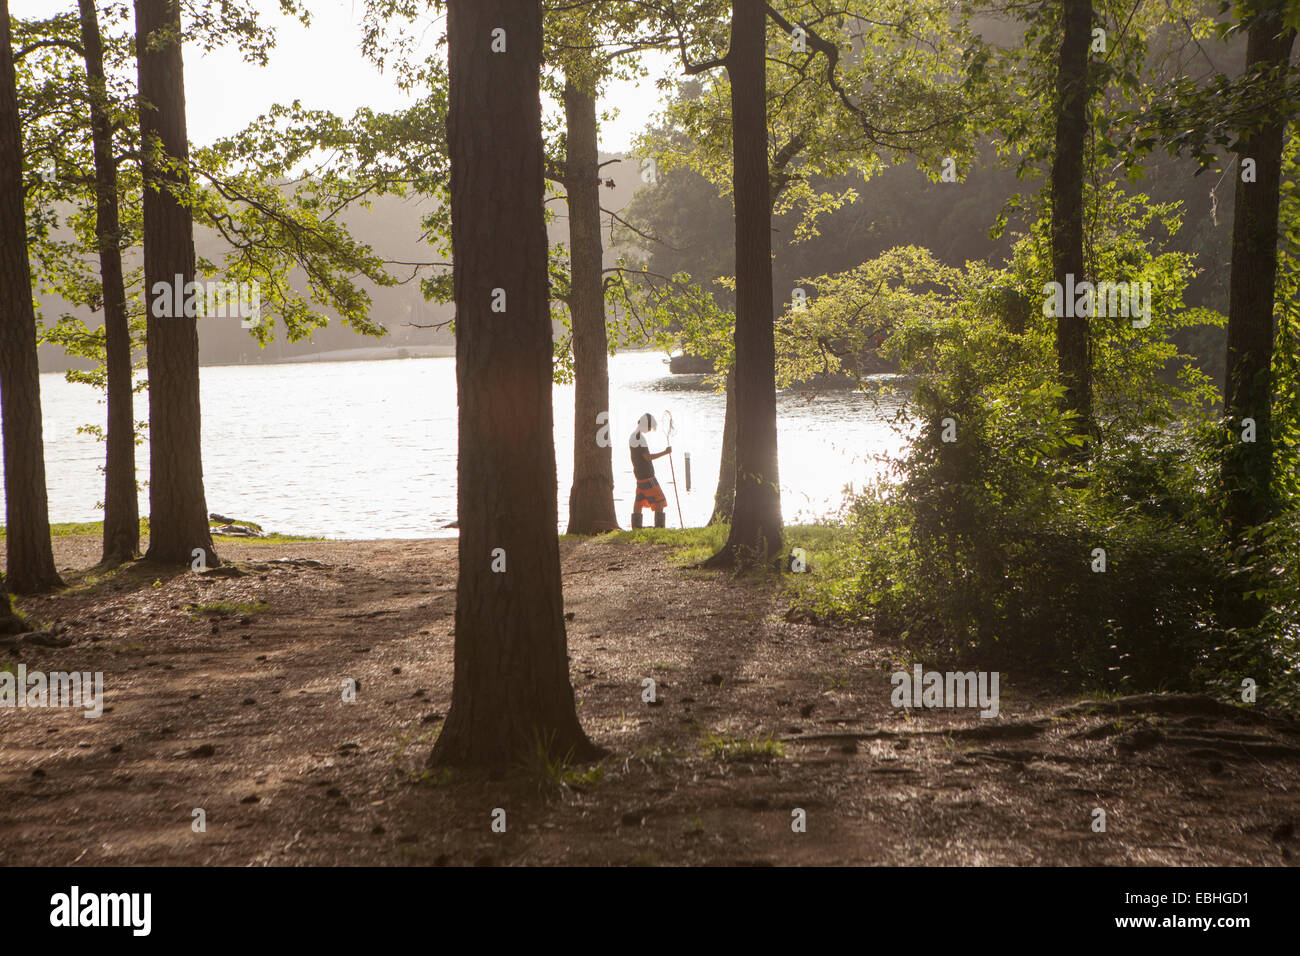 Teenage boy fishing at forest lake, Arkansas, Usa Banque D'Images